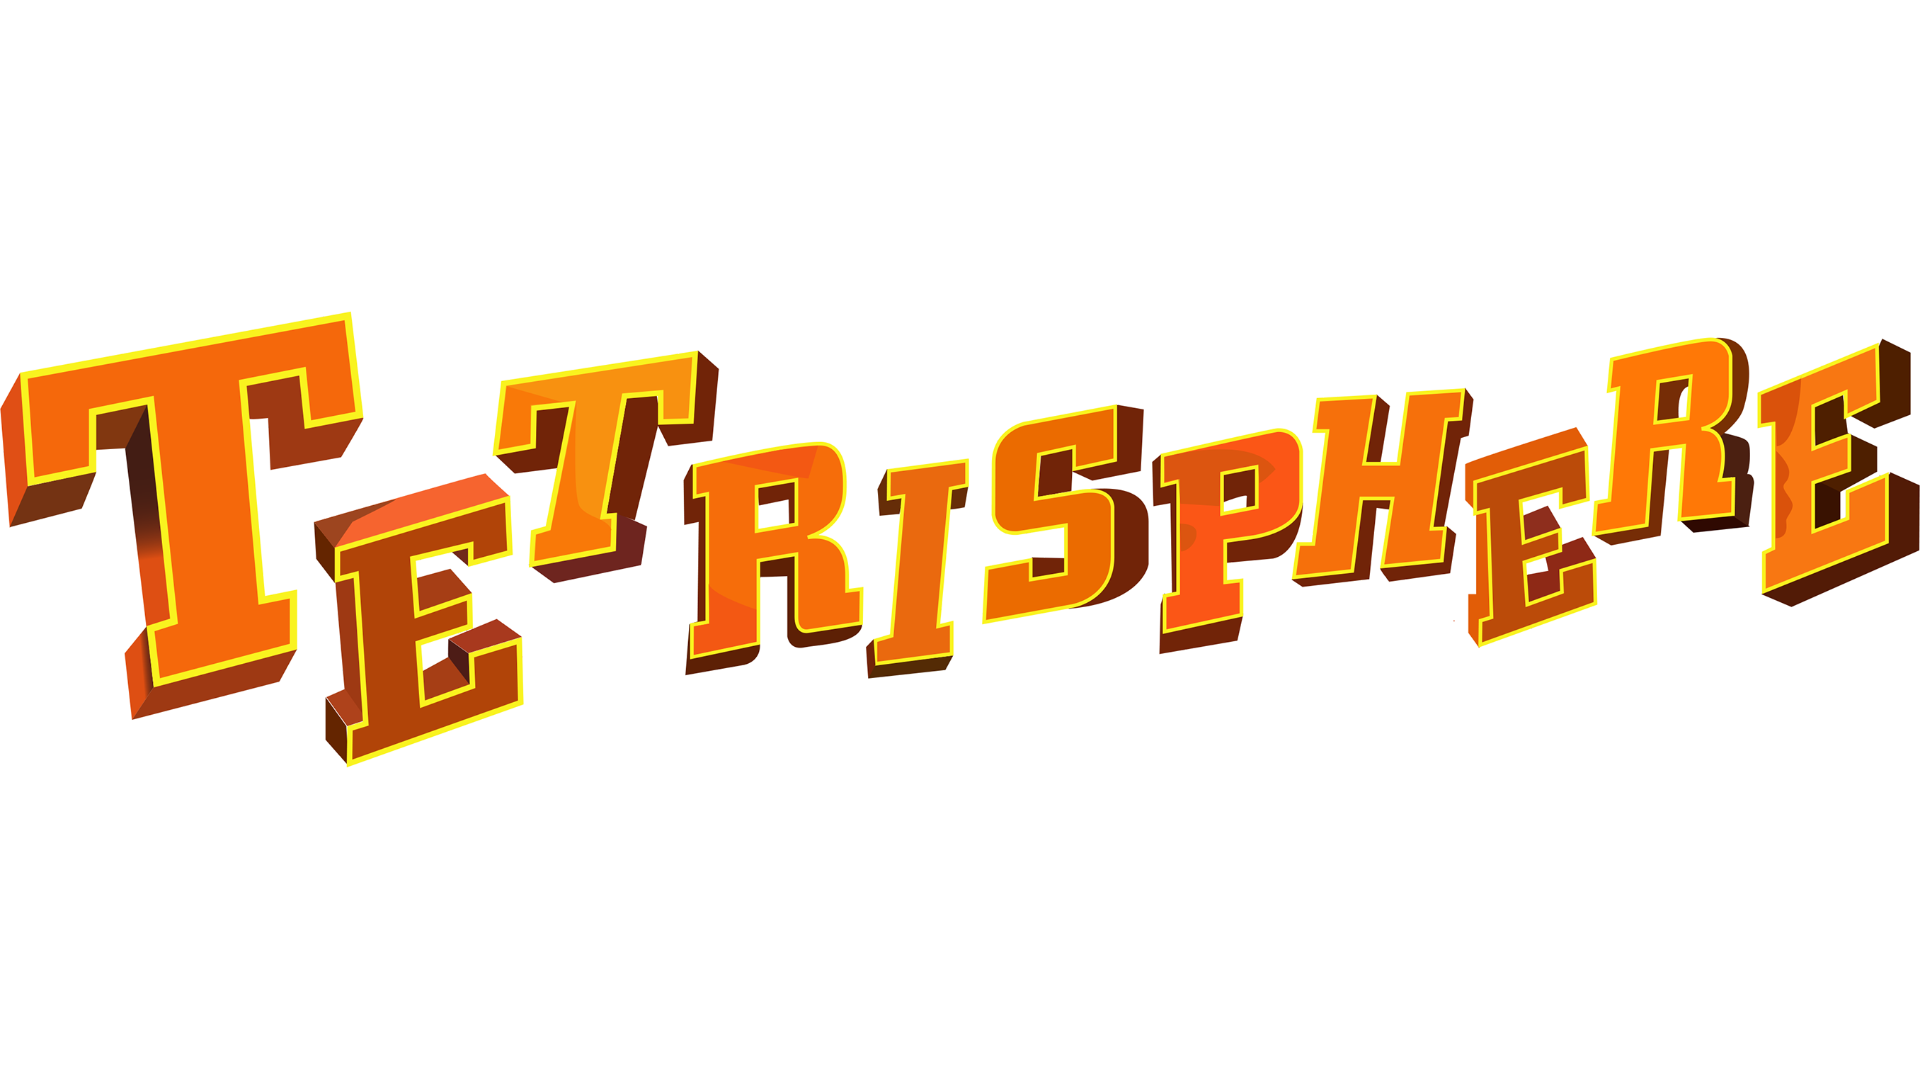 Tetrisphere Logo